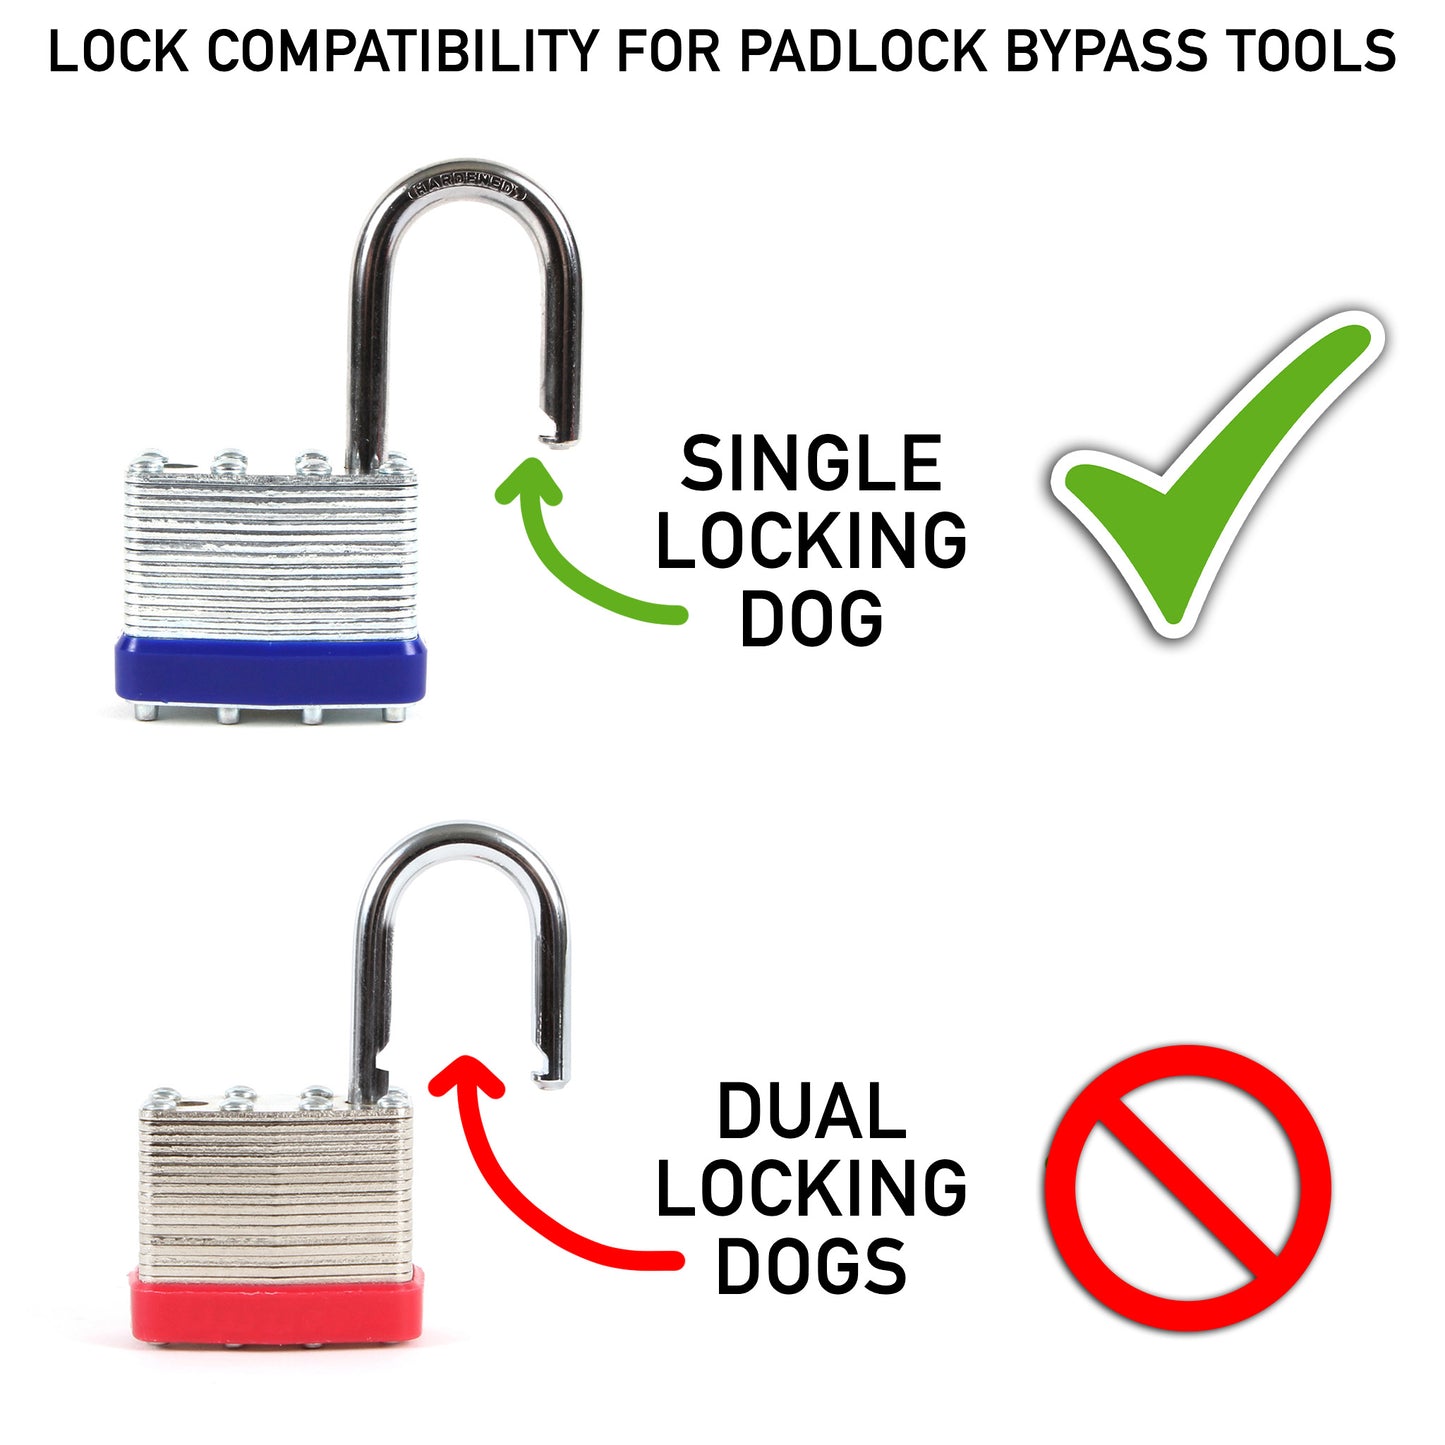 Padlock & Combo Lock Bypass Tools